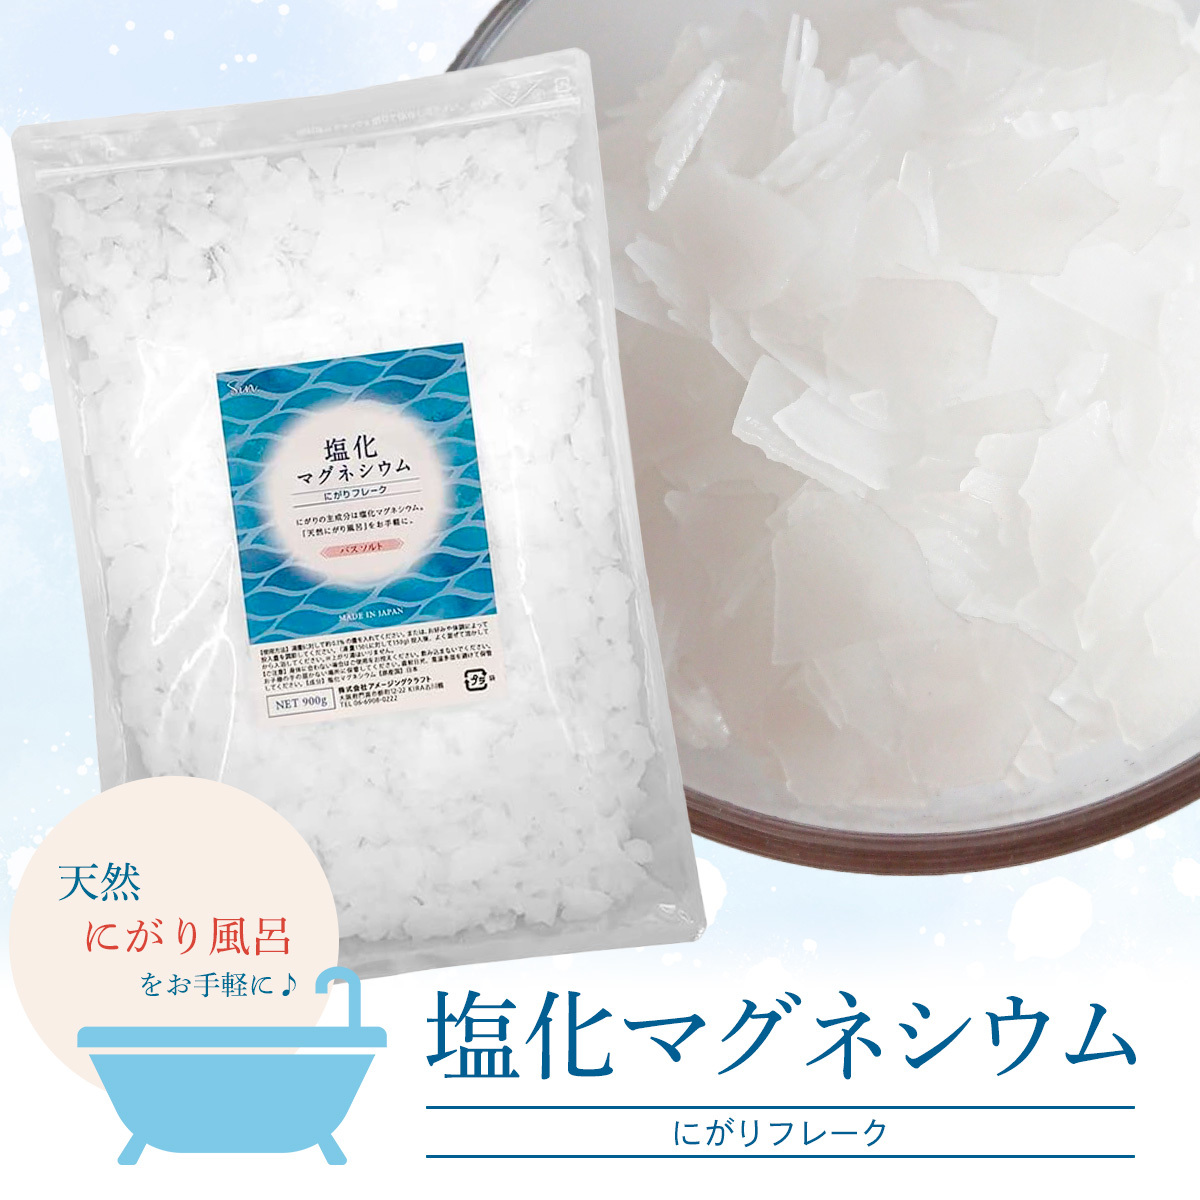  salt . Magne sium... bathwater additive 1800g bath bath salt flakes Magne sium salt flakes moisturizer dry departure sweat skin care 